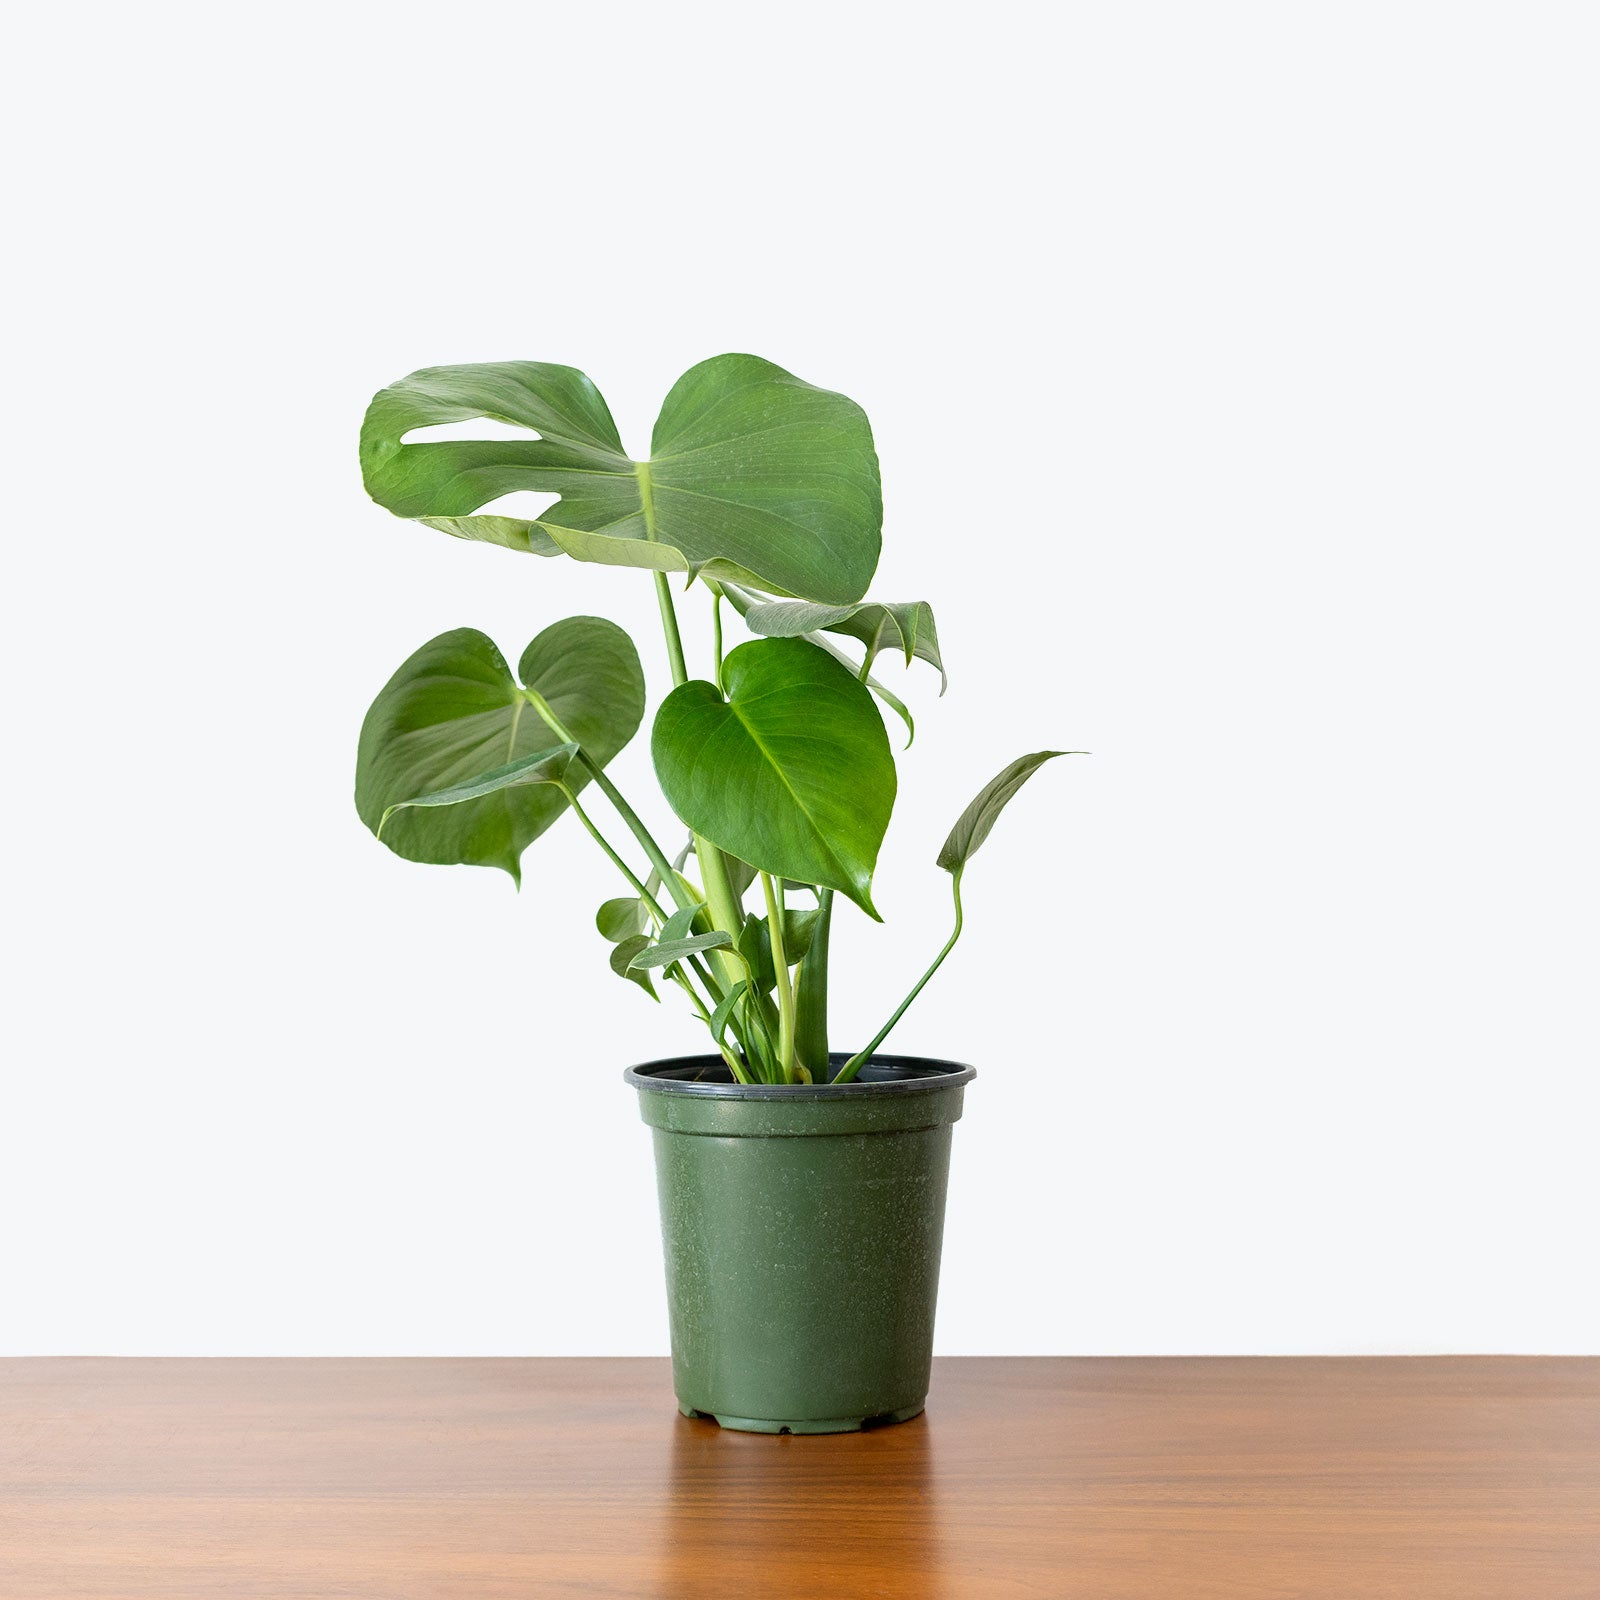 Best Selling Duo Monstera Deliciosa in 3D Printed Eco Friendly Planter - House Plants Delivery Toronto - JOMO Studio